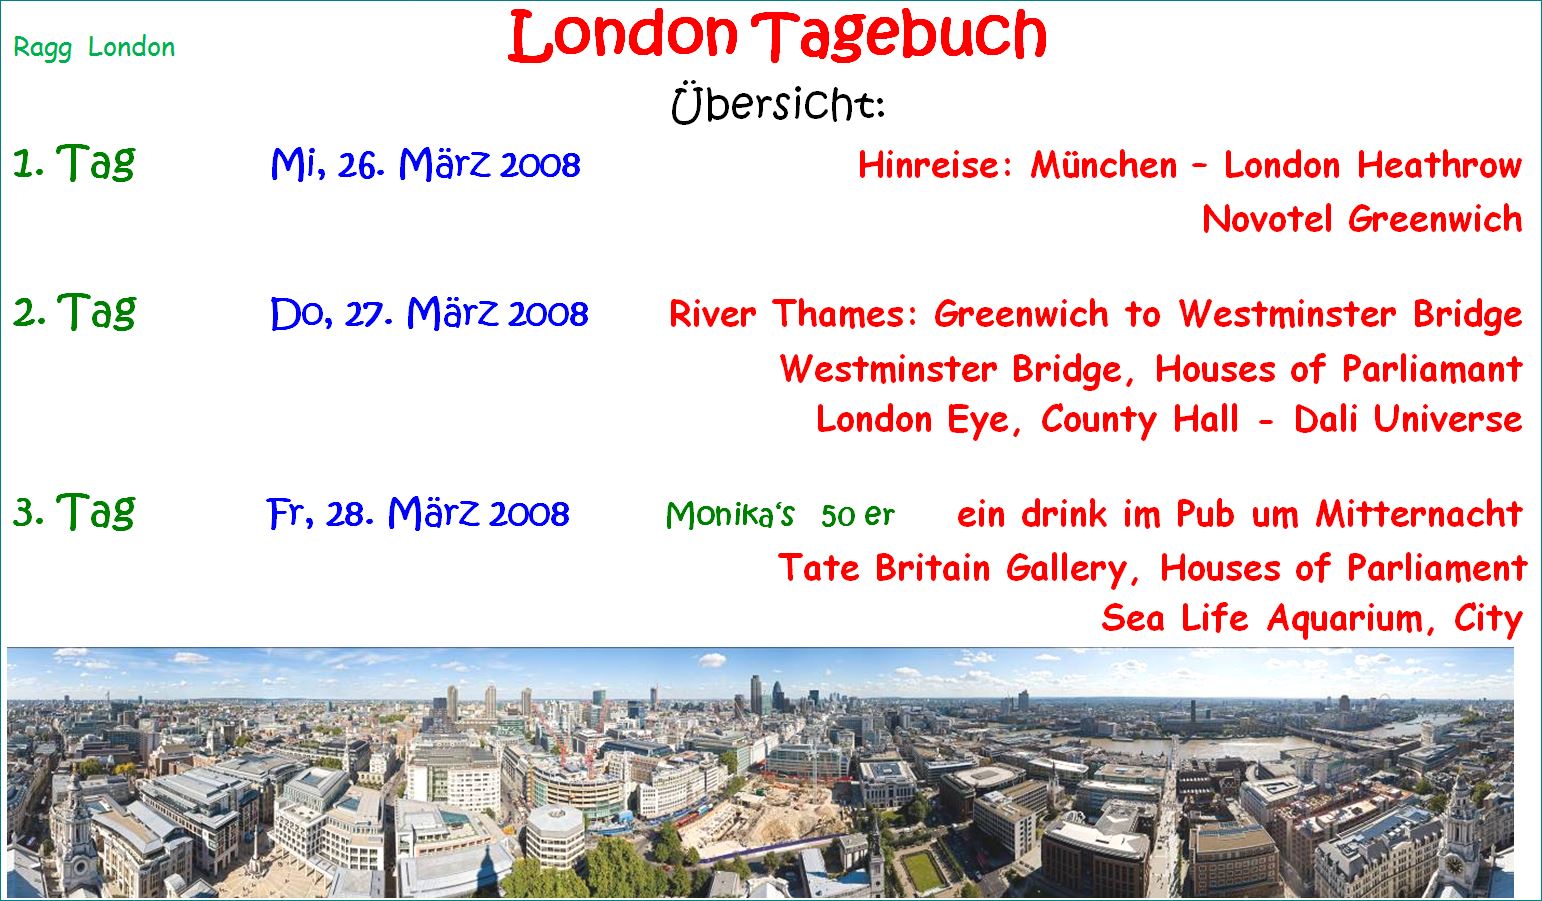 ragg 2008-03-26 -- 03-30 - 1310BA - London - Tagebuch Text - S02 B01